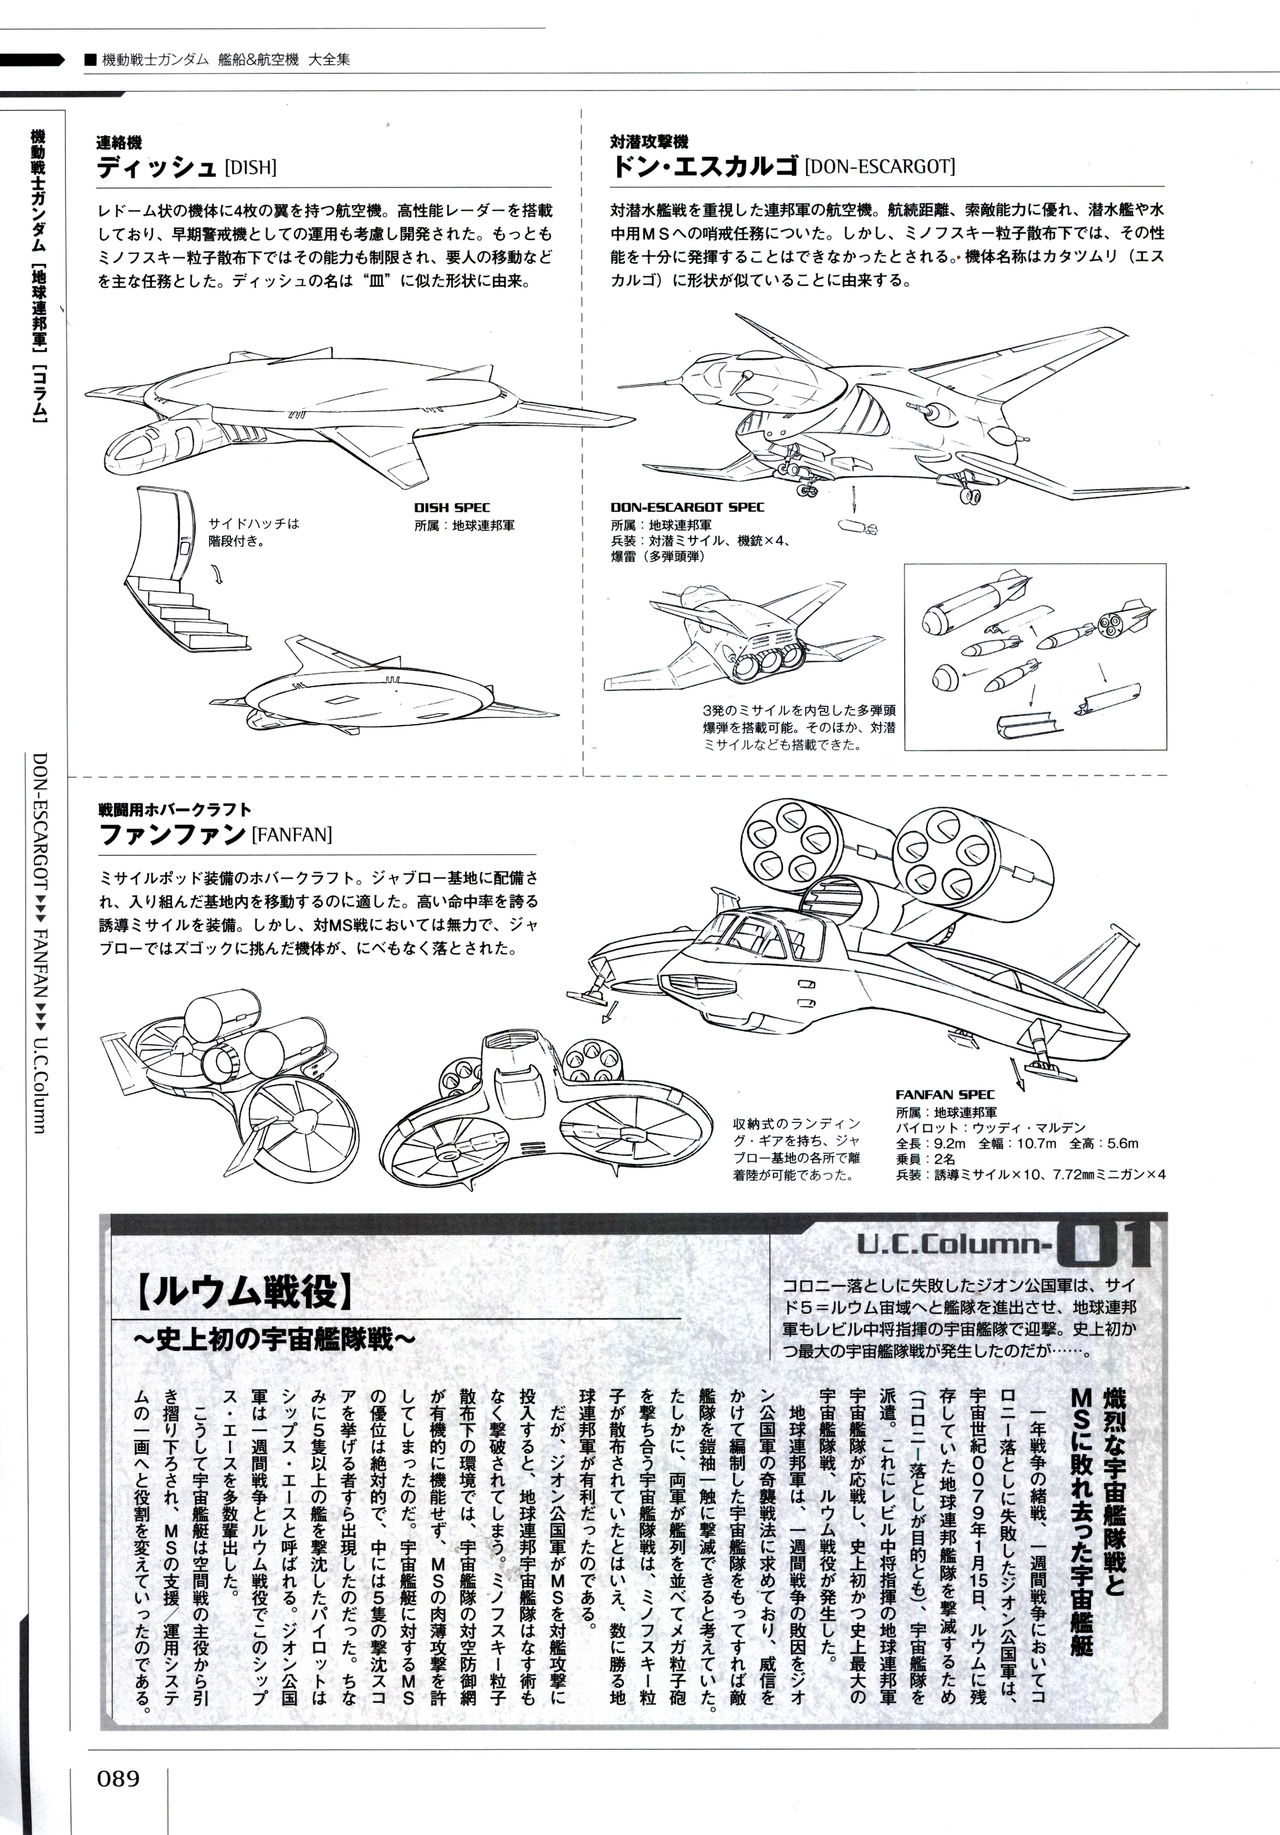 Mobile Suit Gundam - Ship & Aerospace Plane Encyclopedia - Revised Edition 94